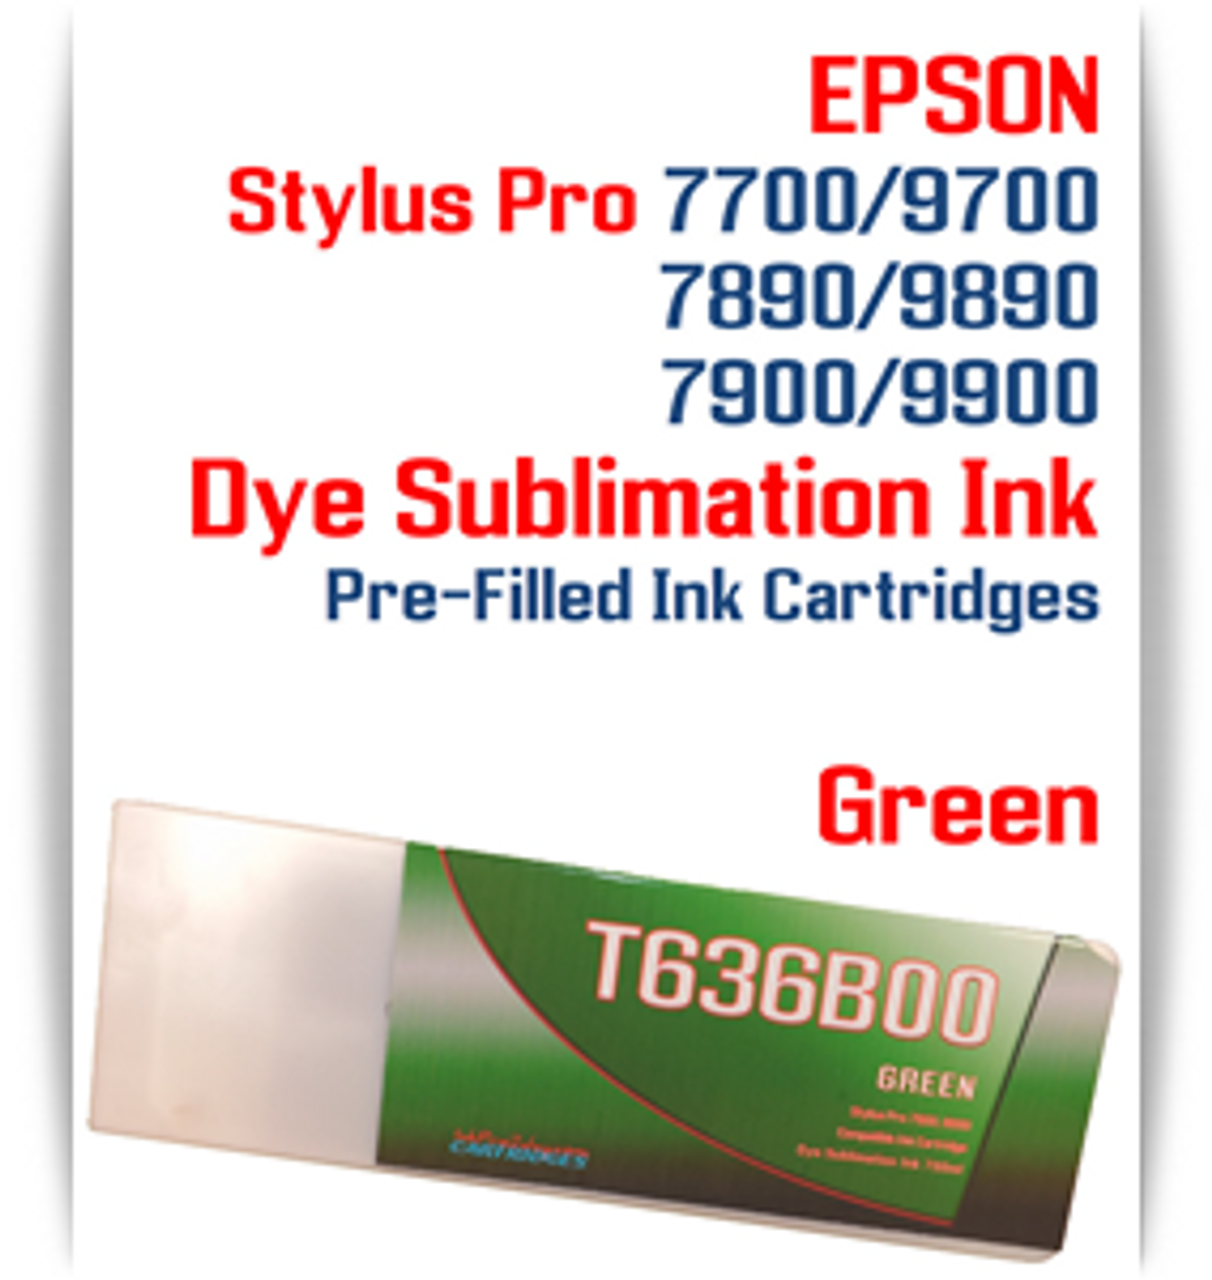 Green Epson Stylus Pro 7900/9900 Pre-Filled Dye Sublimation Ink Cartridge